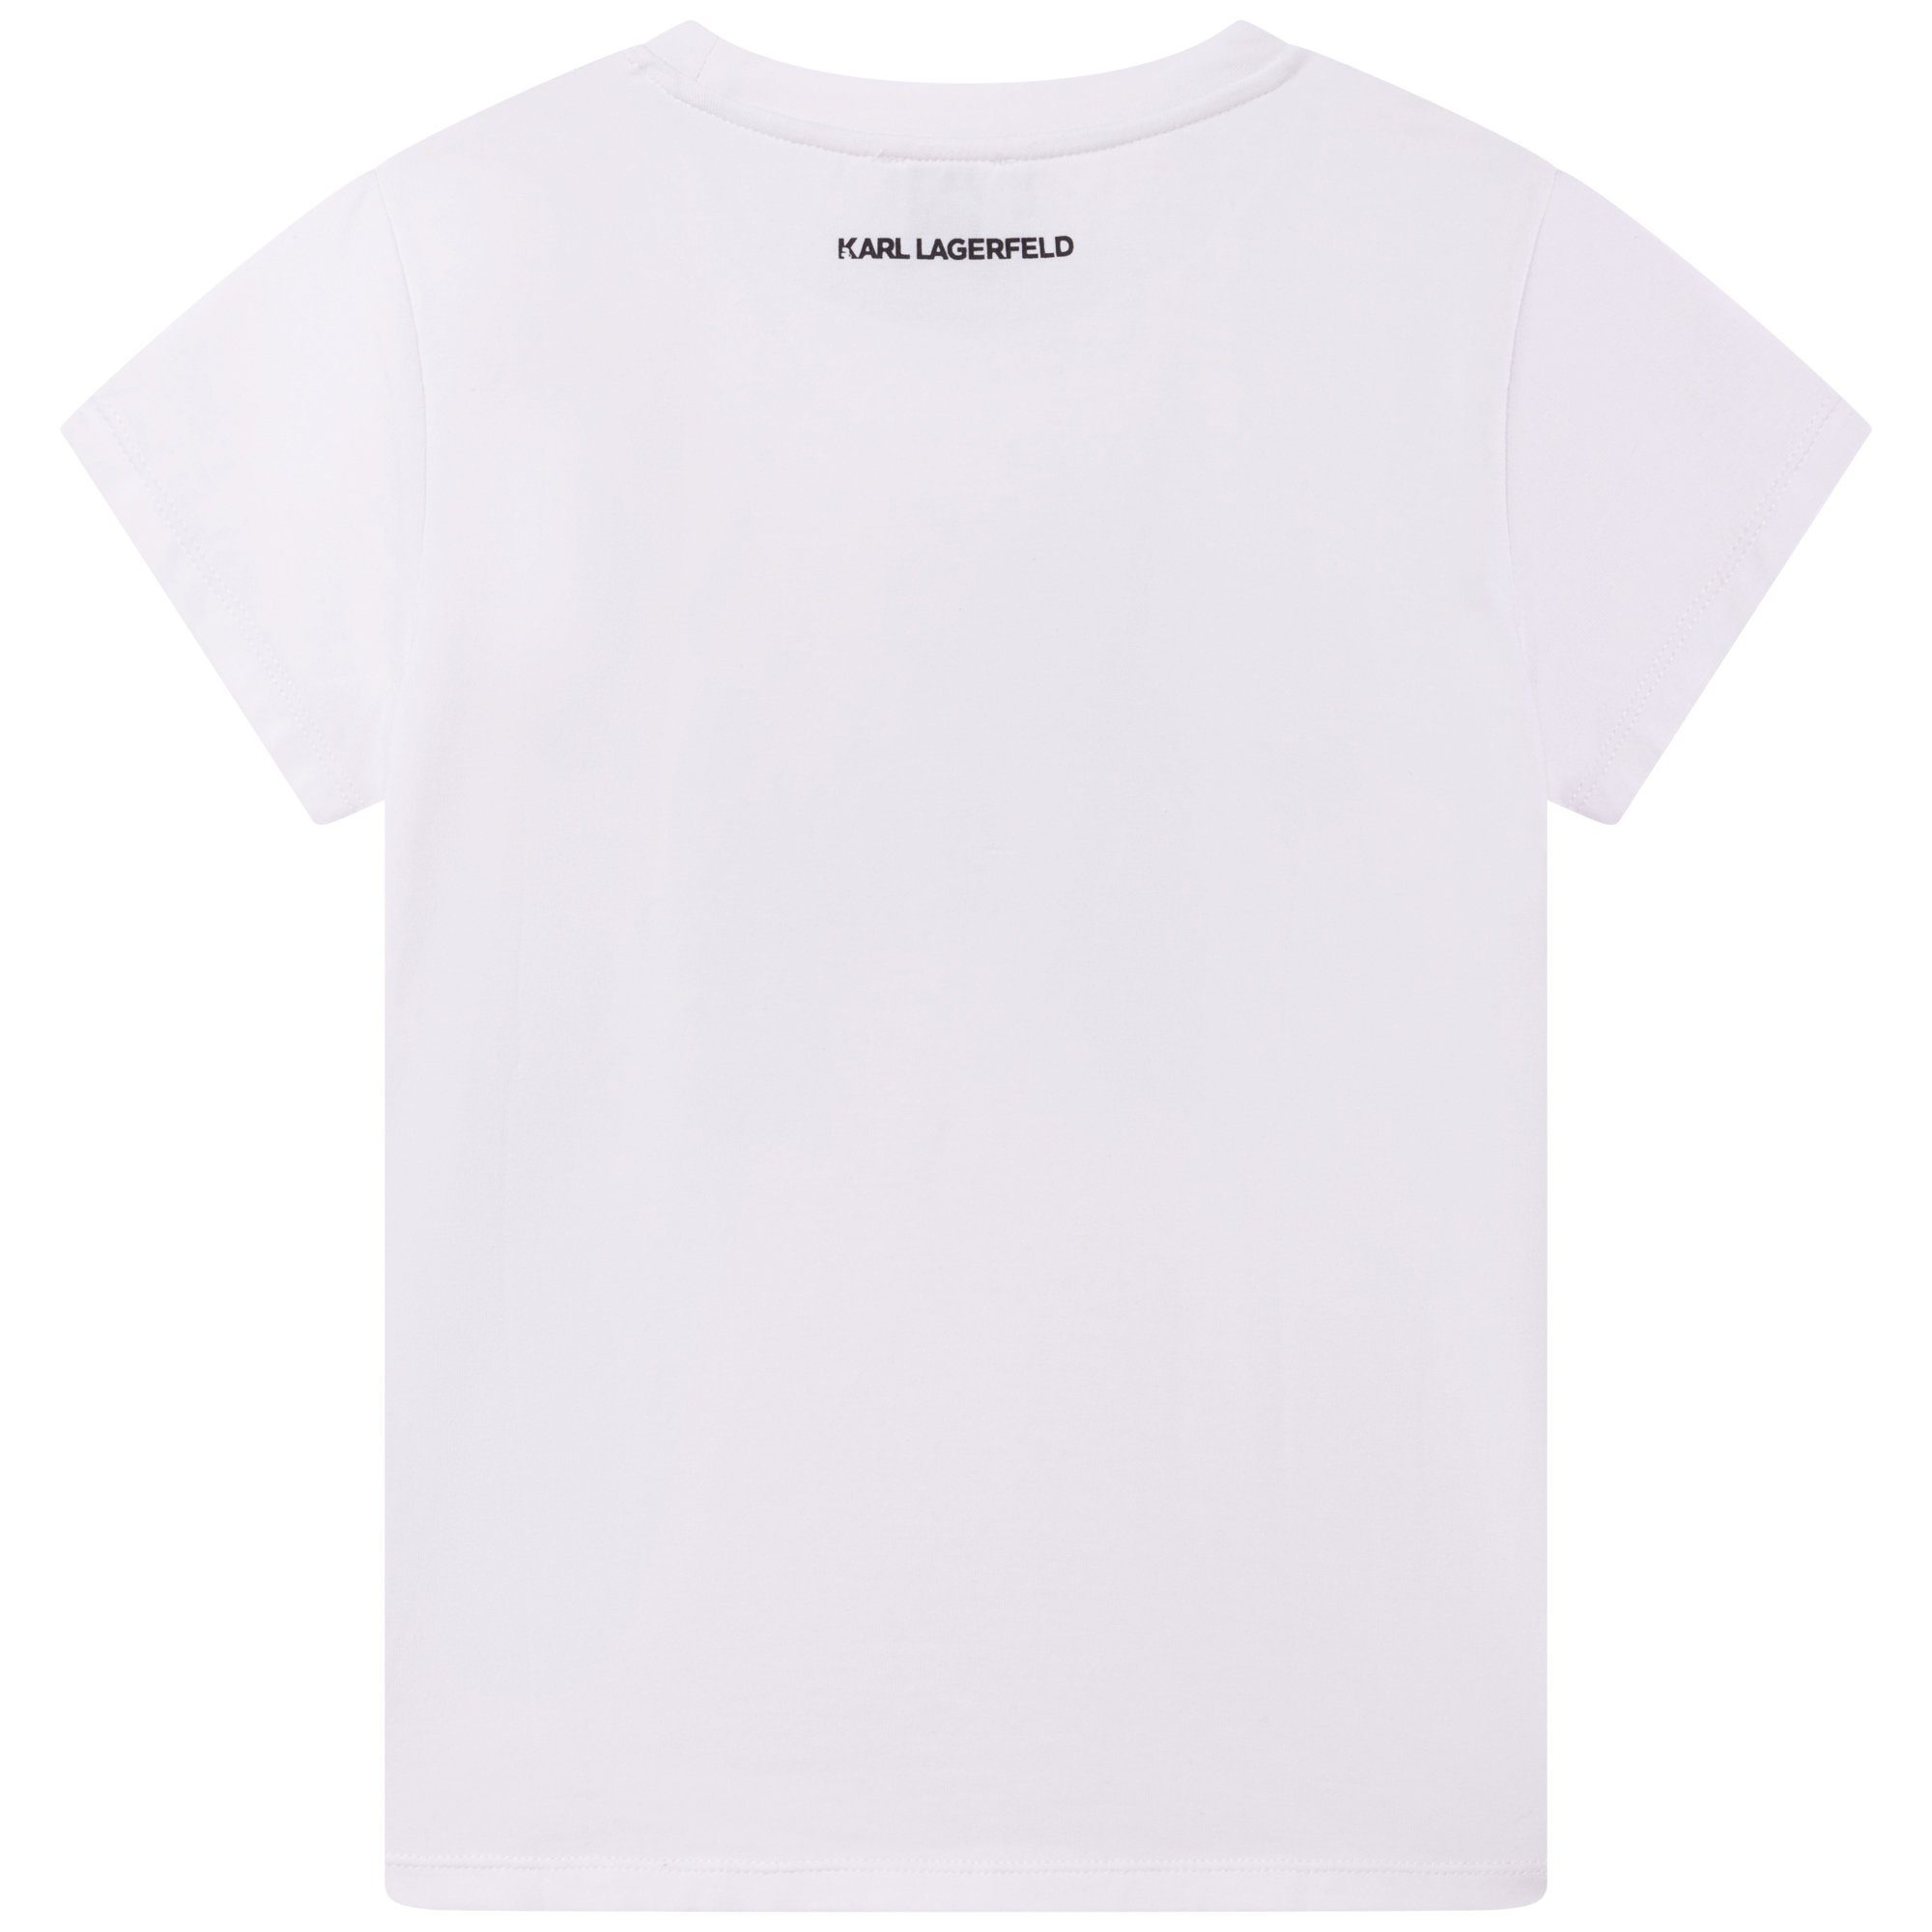 KARL LAGERFELD Print-Shirt Karl Lagerfeld T-Shirt Kids girs